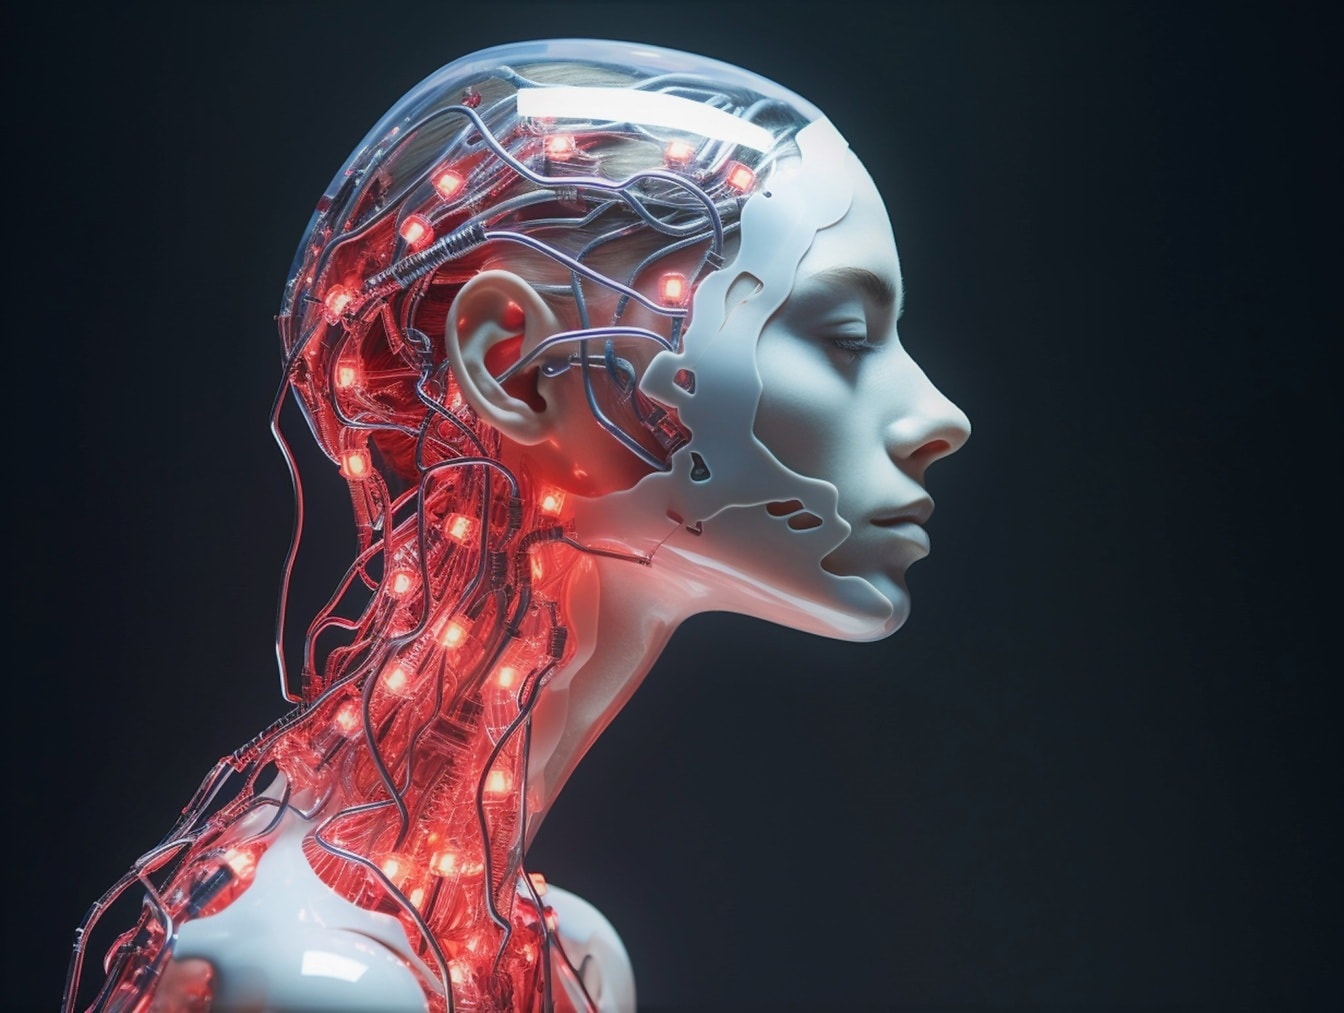 Robot cyborg humanoïde femme doté d’une intelligence artificielle